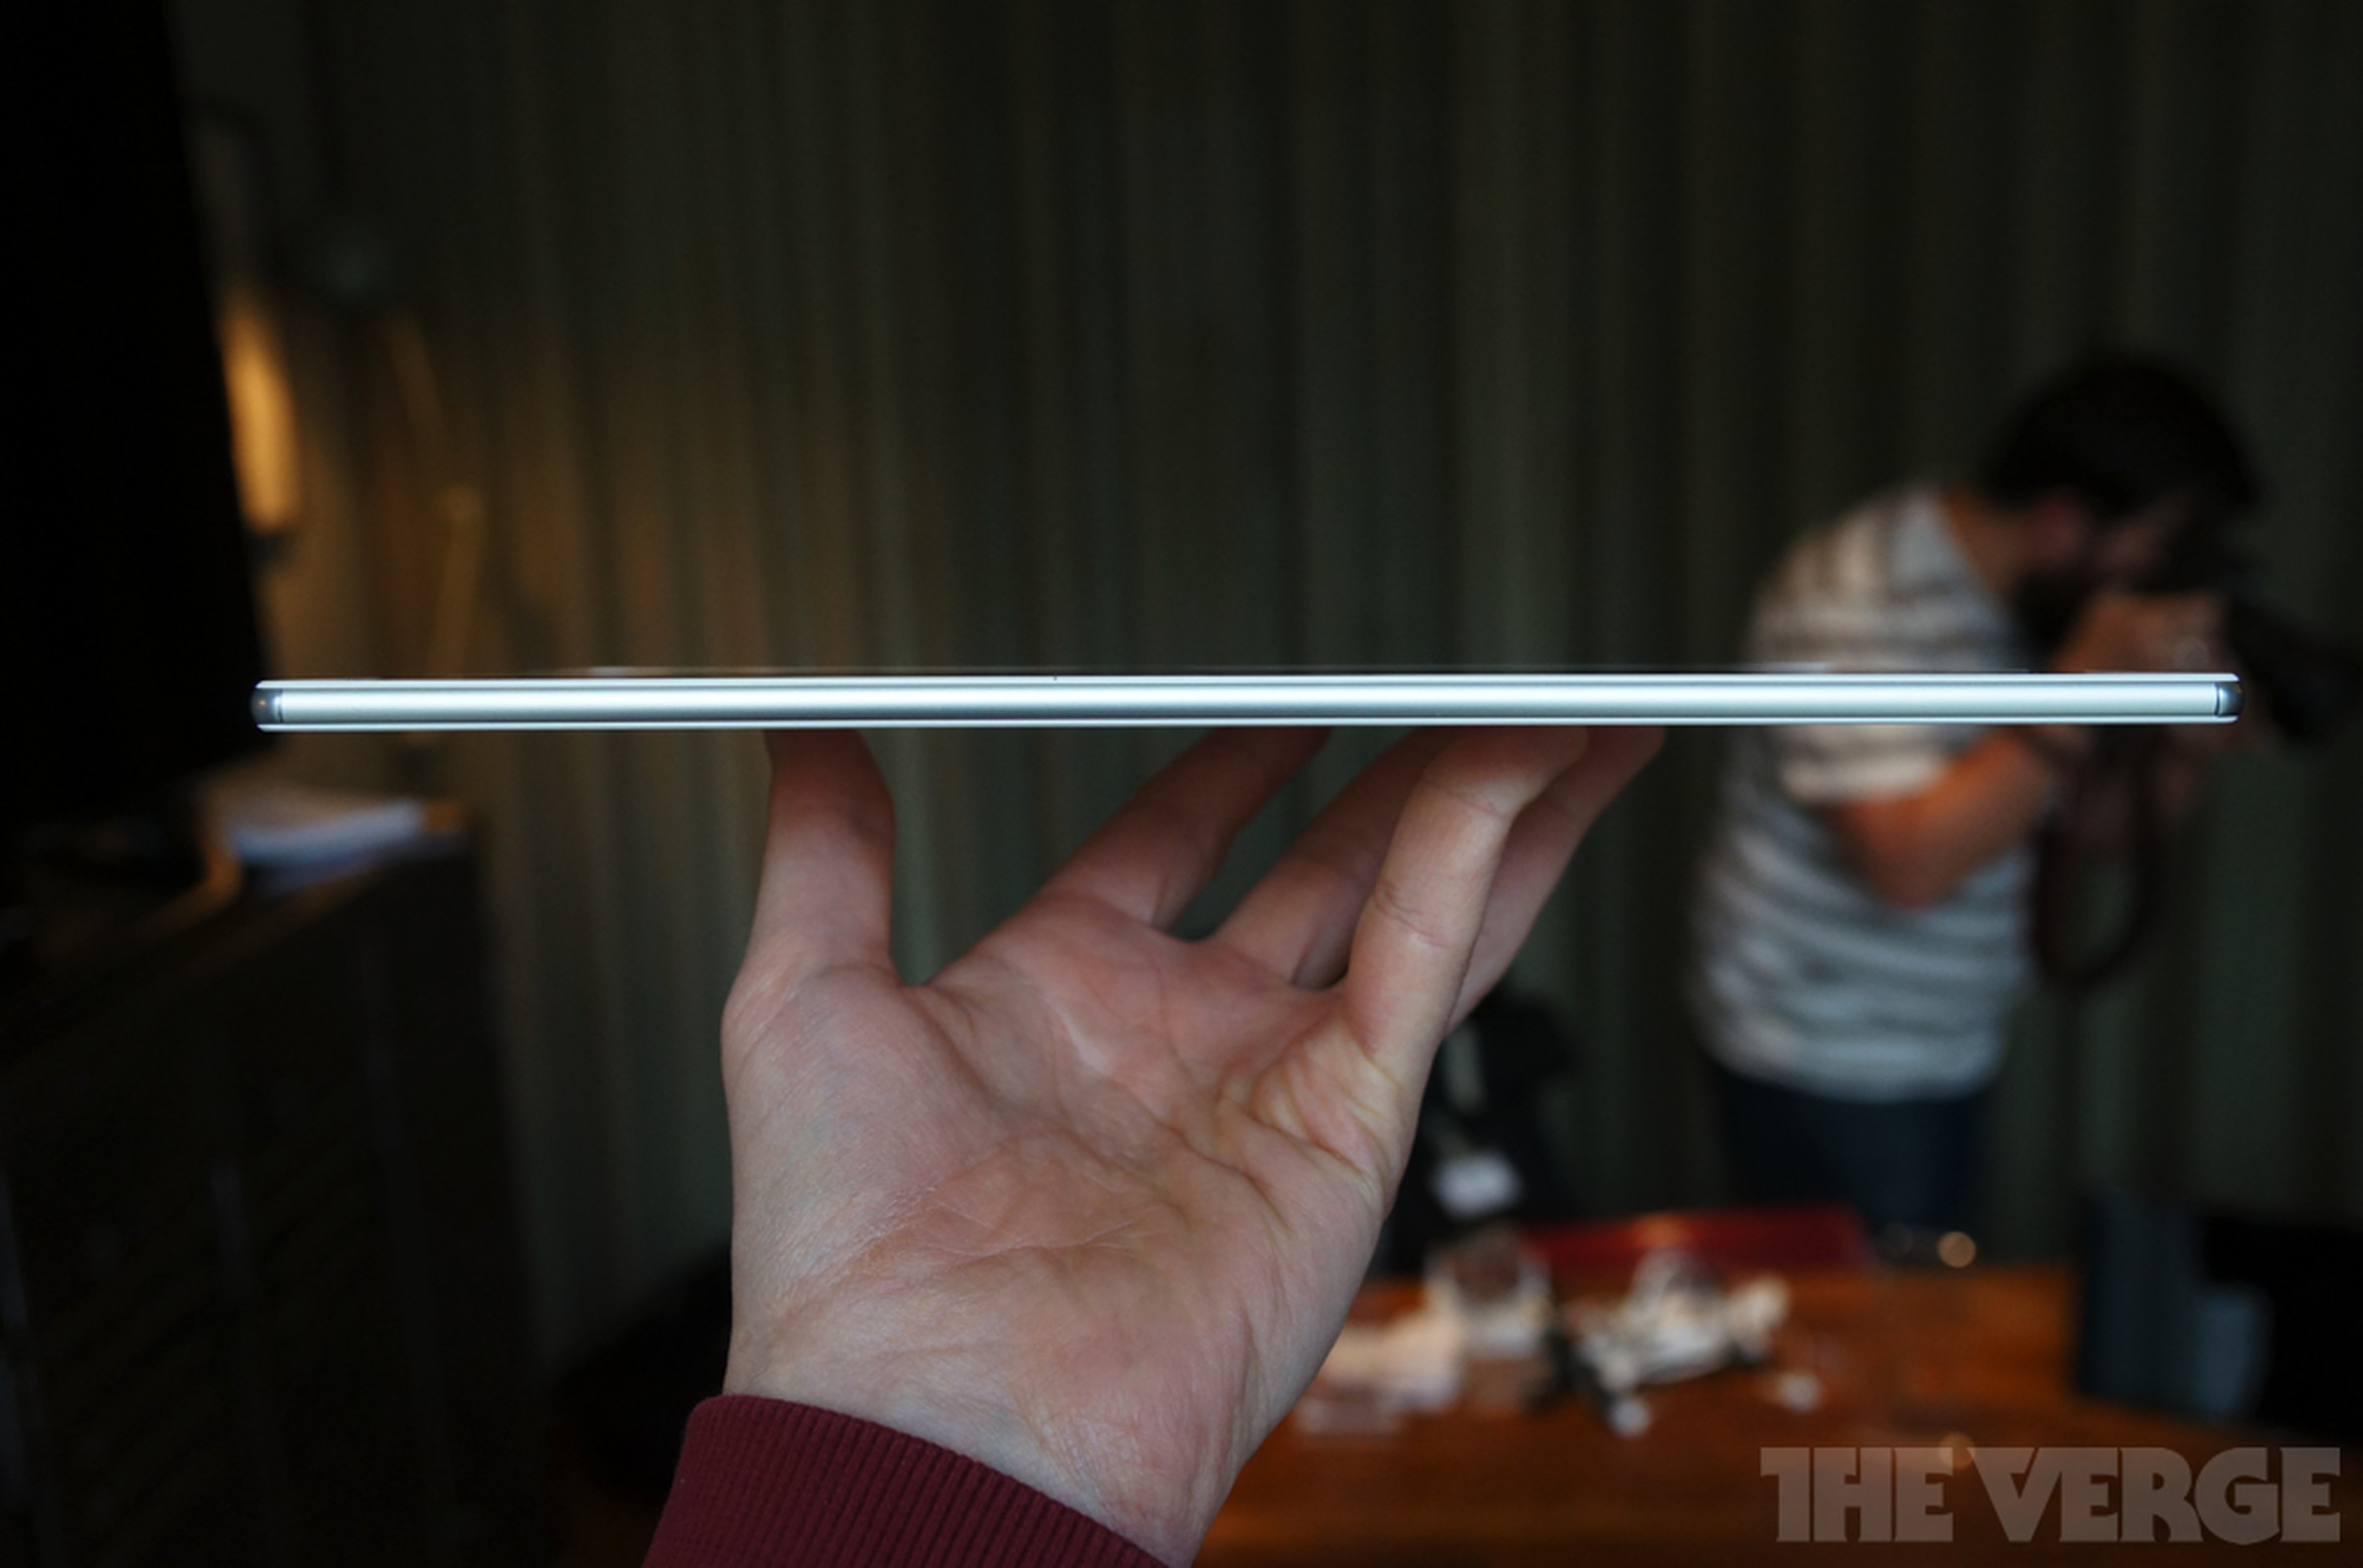 Sony Xperia Z4 Tablet hands-on photos